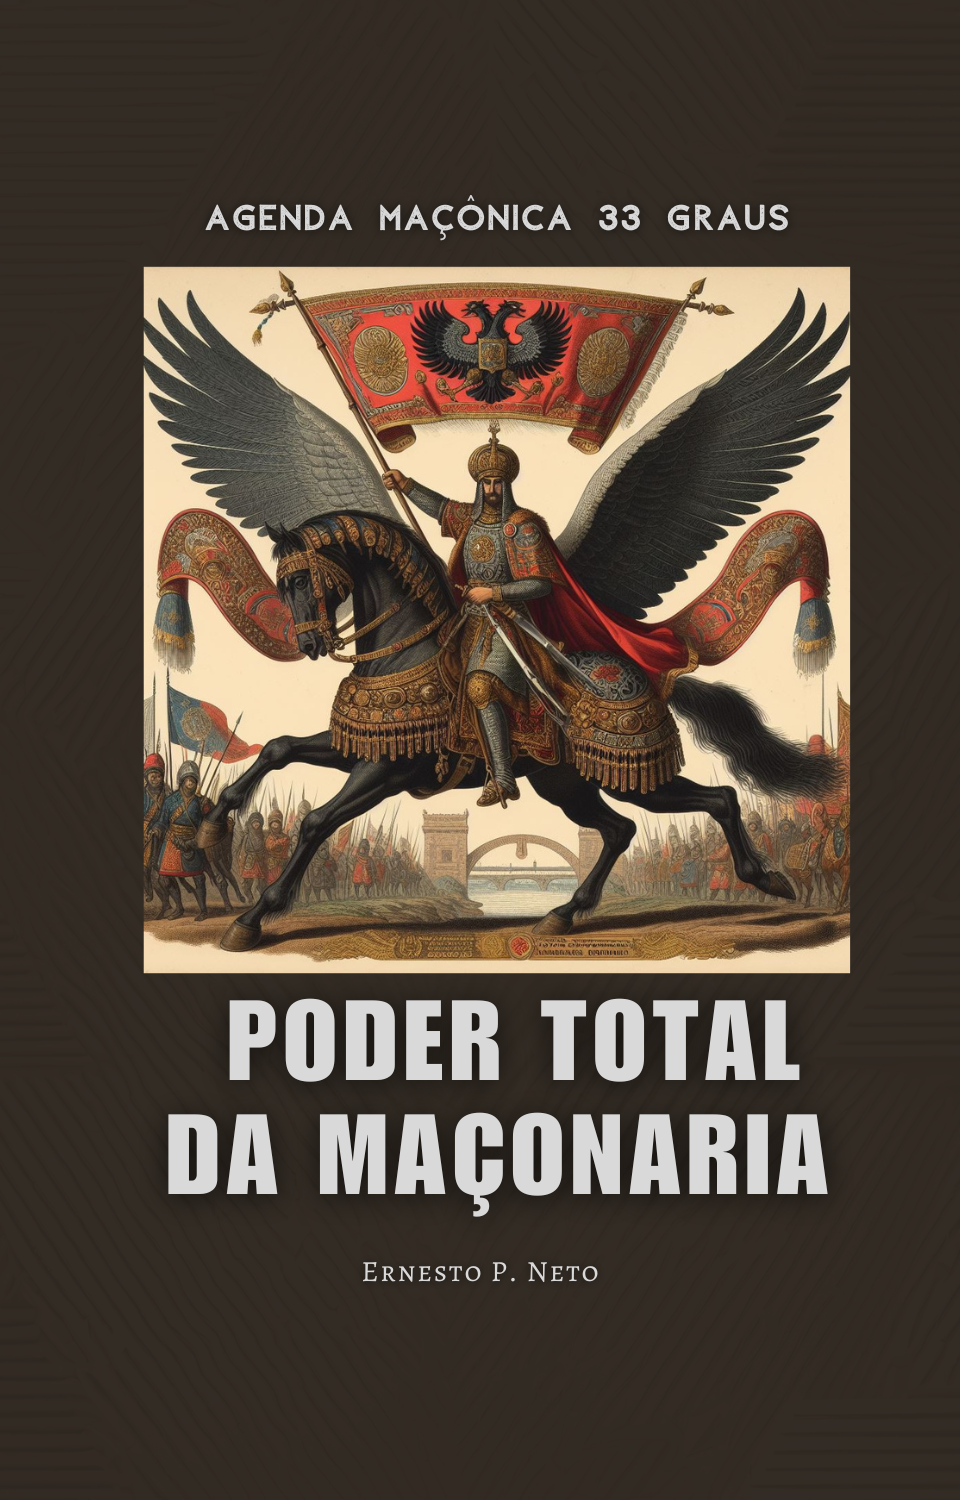 capa agenda maçoniara ofiial640x 1000 (2)